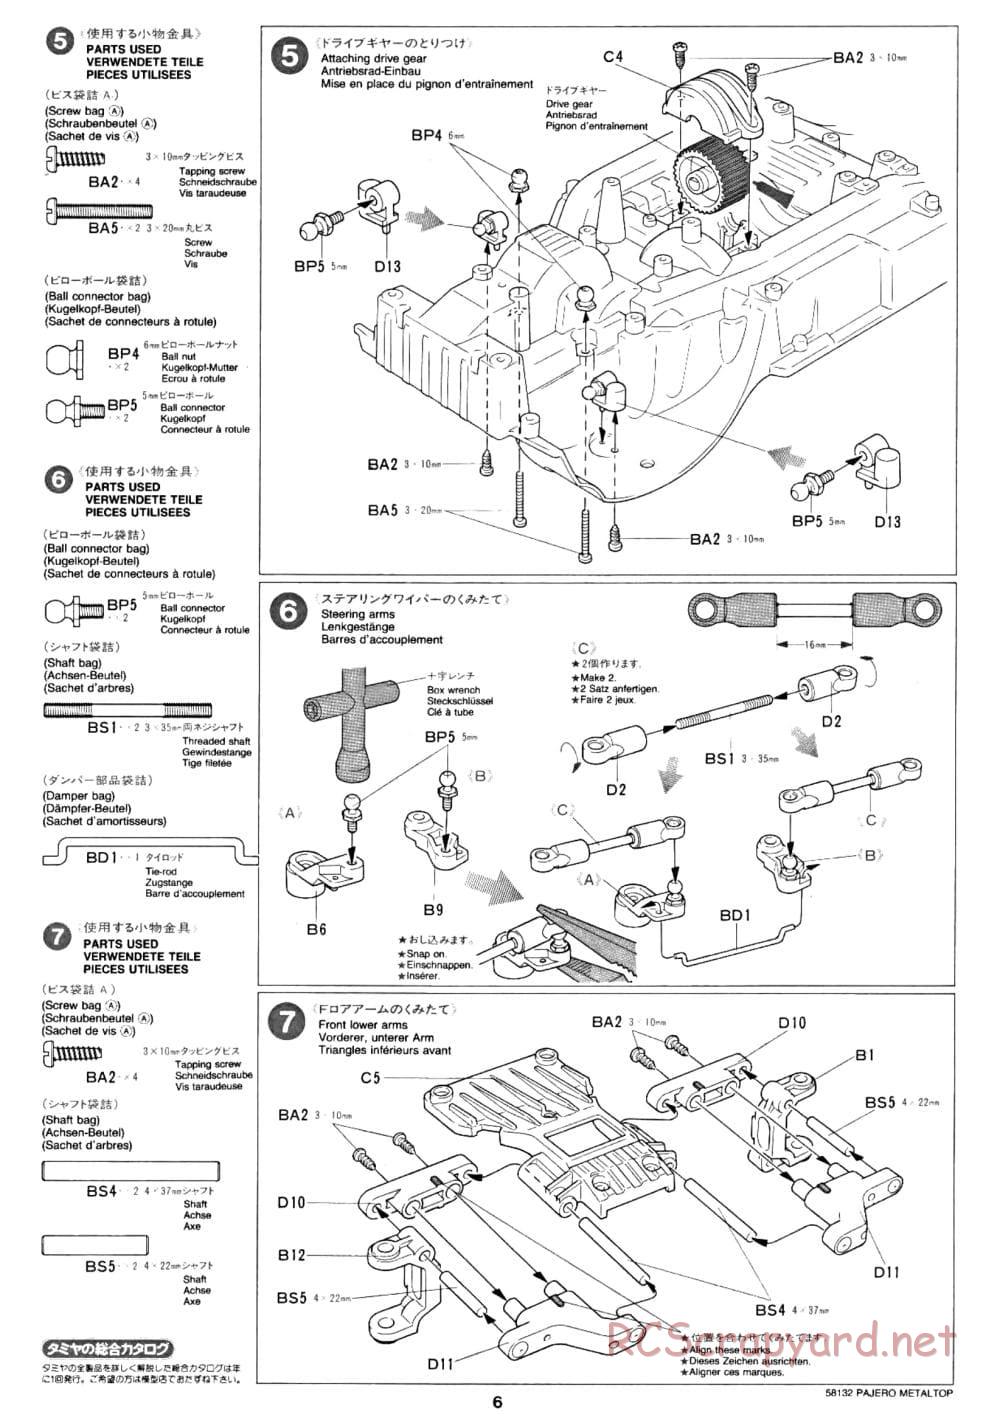 Tamiya - Mitsubishi Pajero Metaltop Wide - CC-01 Chassis - Manual - Page 6